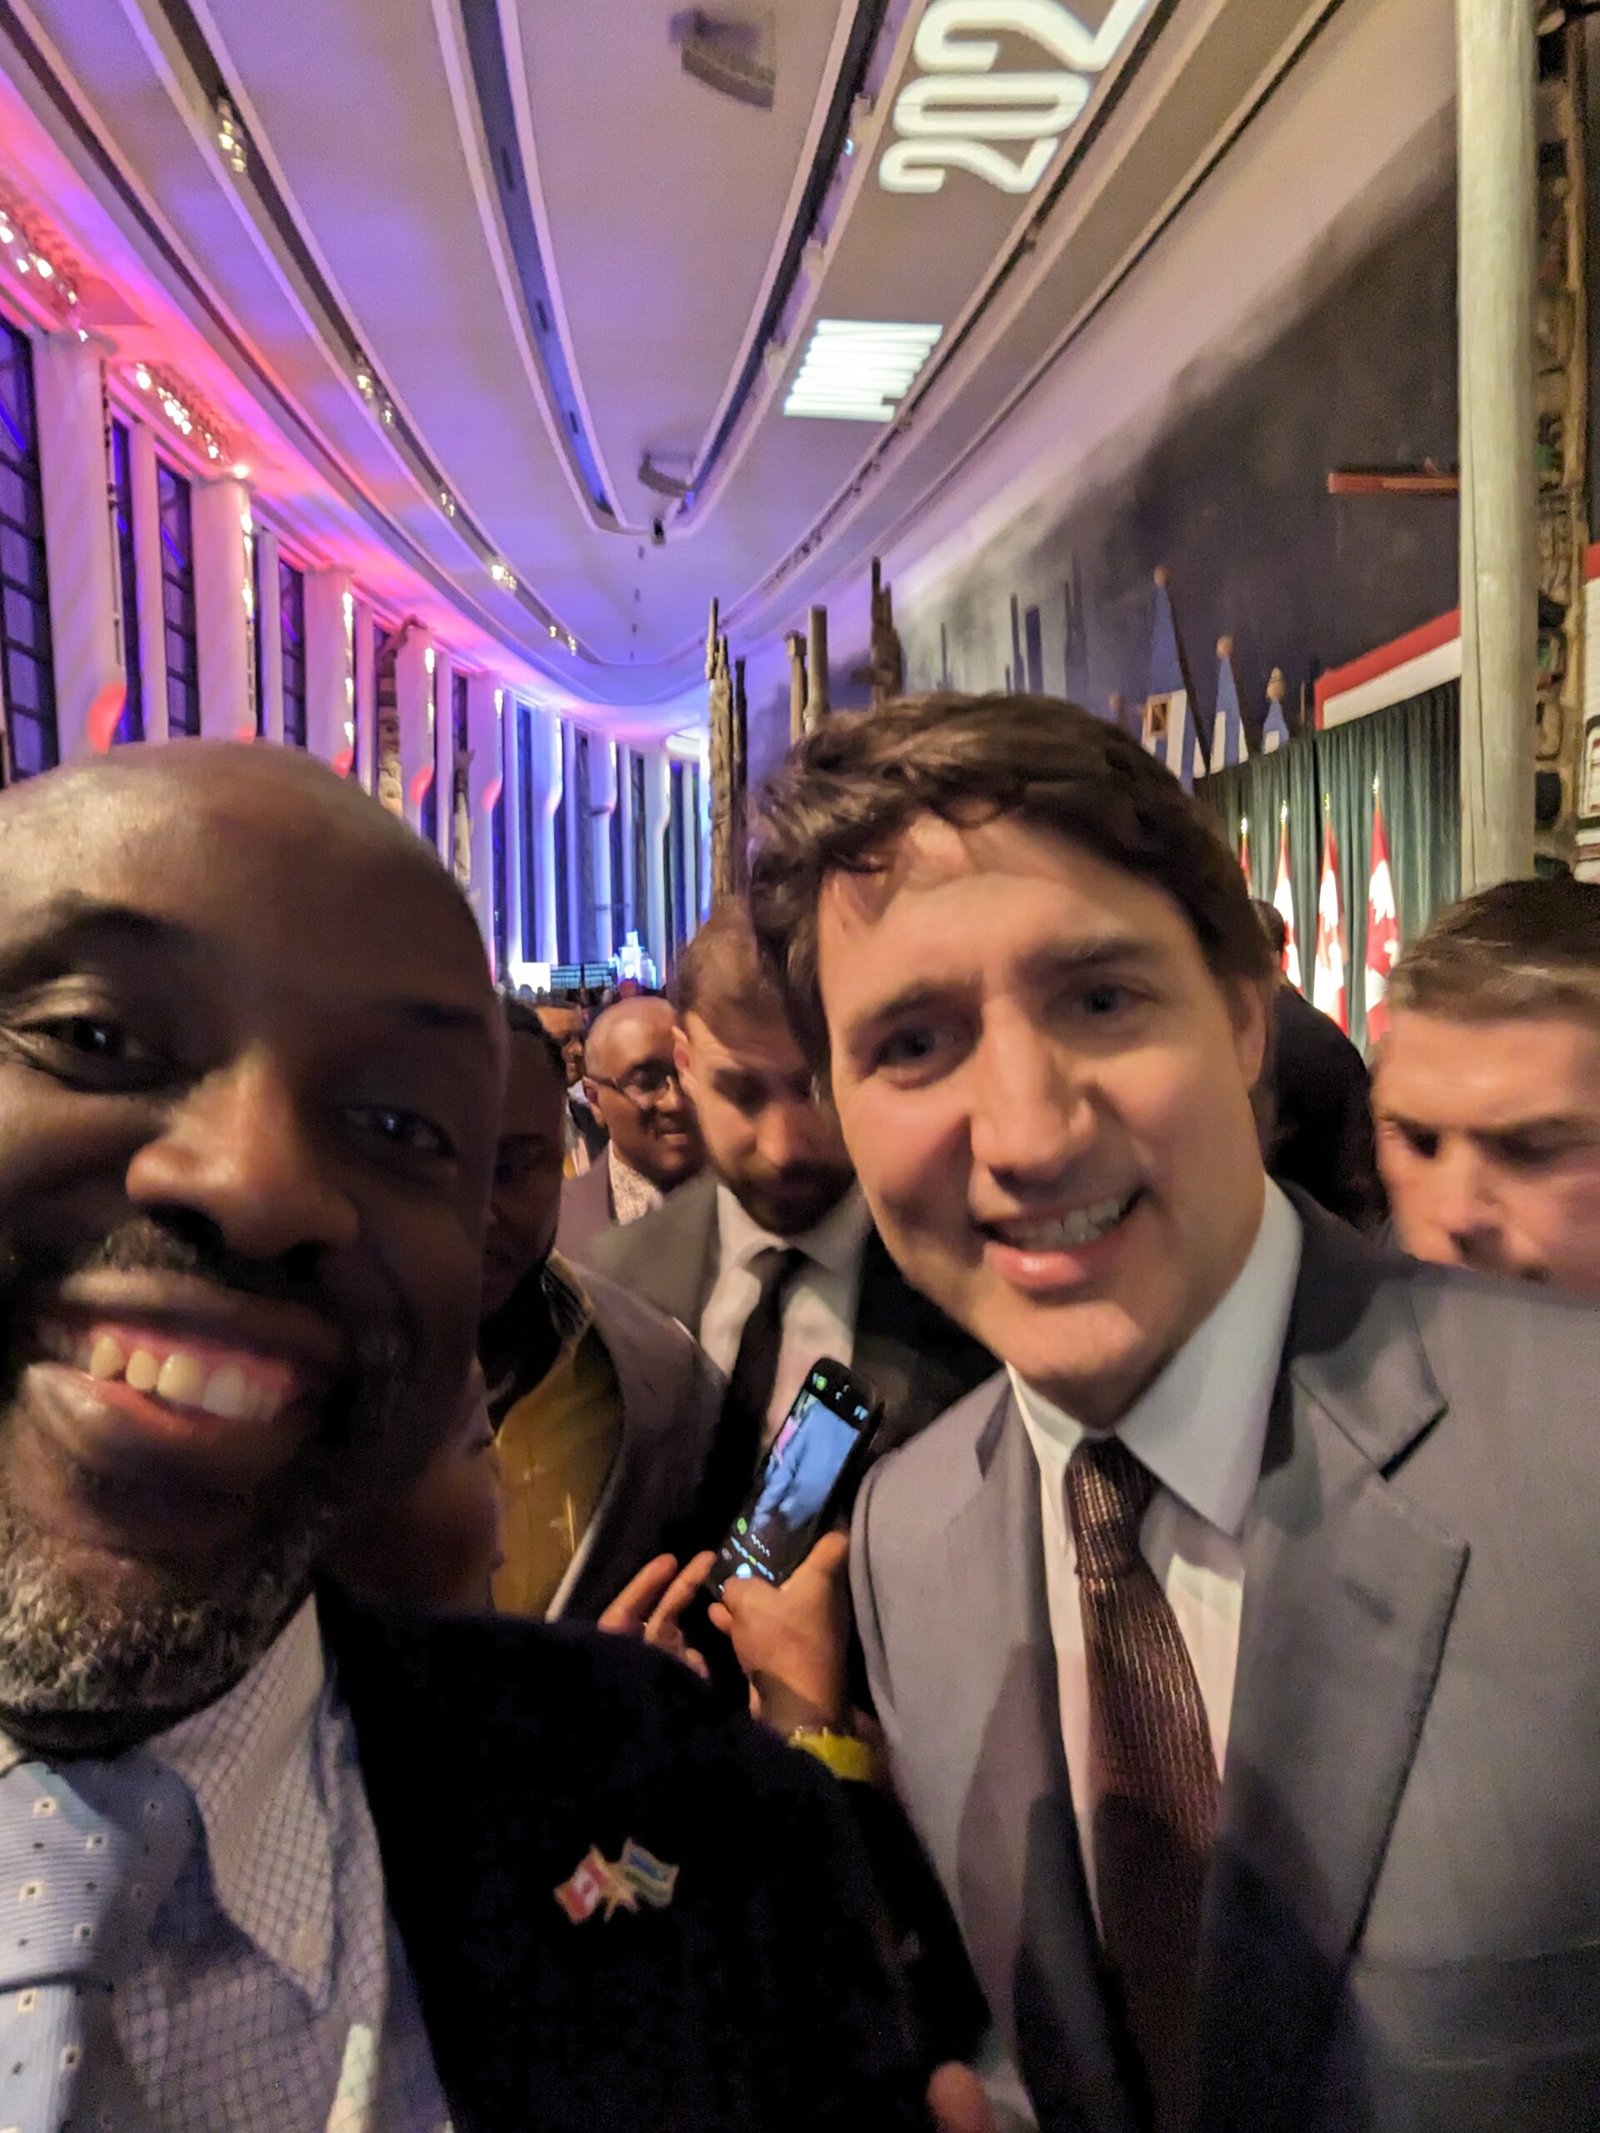 Justin Trudeau - Prime Minister of Canada